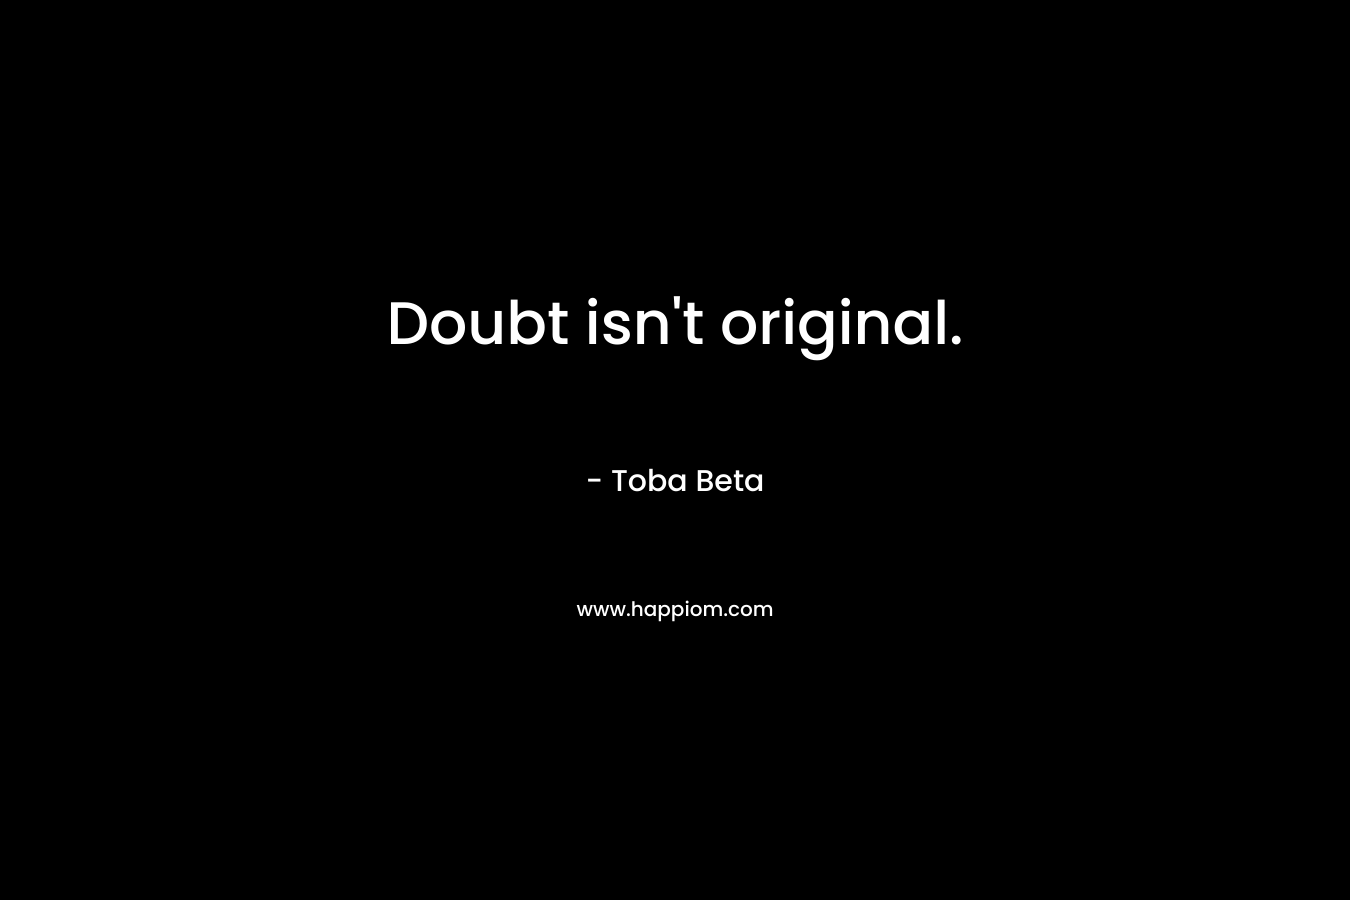 Doubt isn't original.